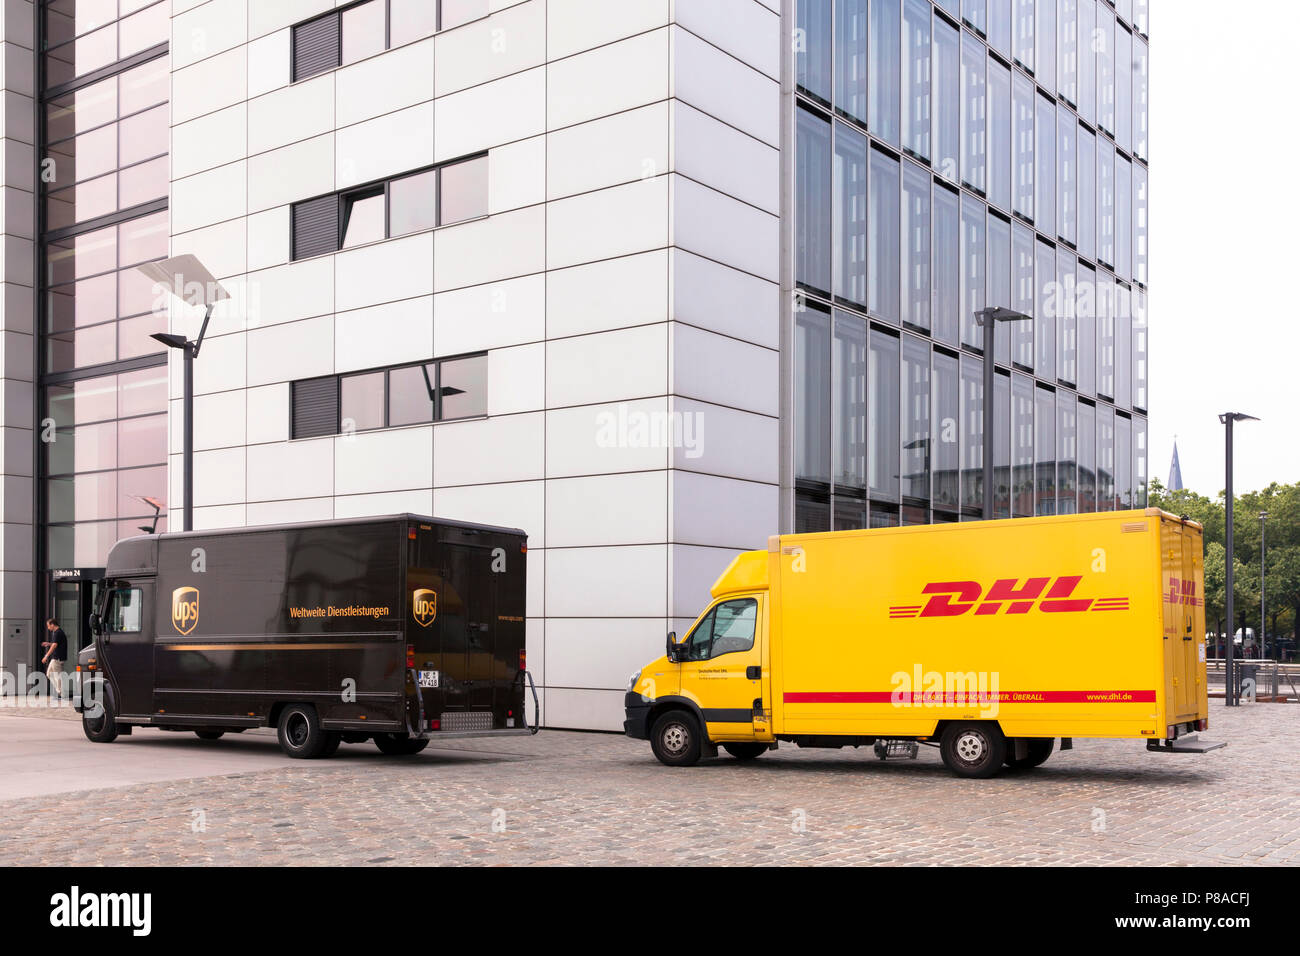 DHL parcel service e UPS Parcel service auto di fronte della gru Casa Sud a Rheinau Harbour, Colonia, Germania. DHL und UPS Fahrzeuge vor dem Kranh Foto Stock